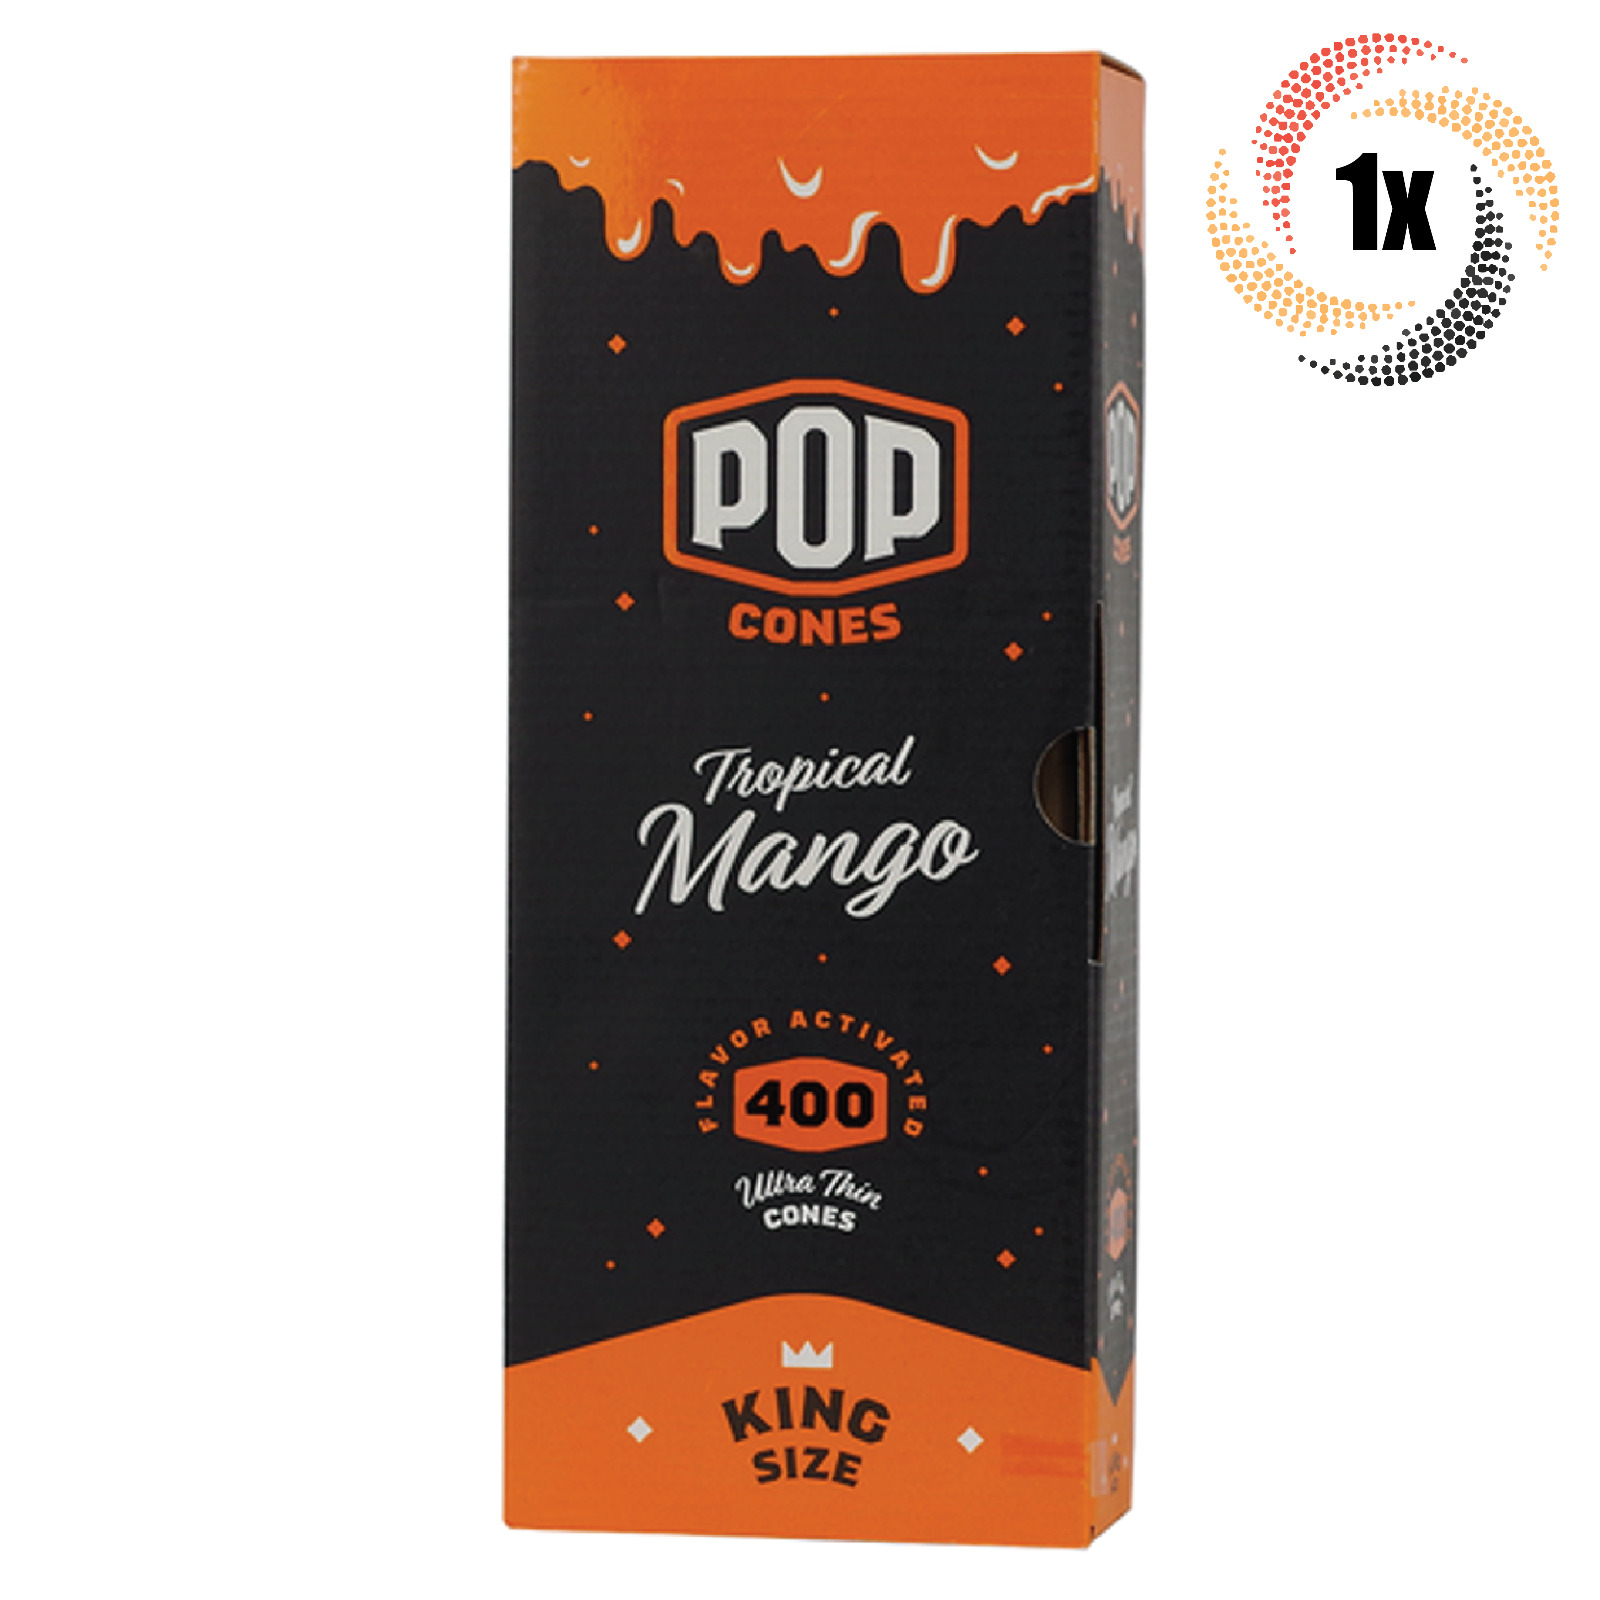 1x Box Pop Tropical Mango Cones | 400 Cones Each | 1 1/4 | + 2 Free Tubes